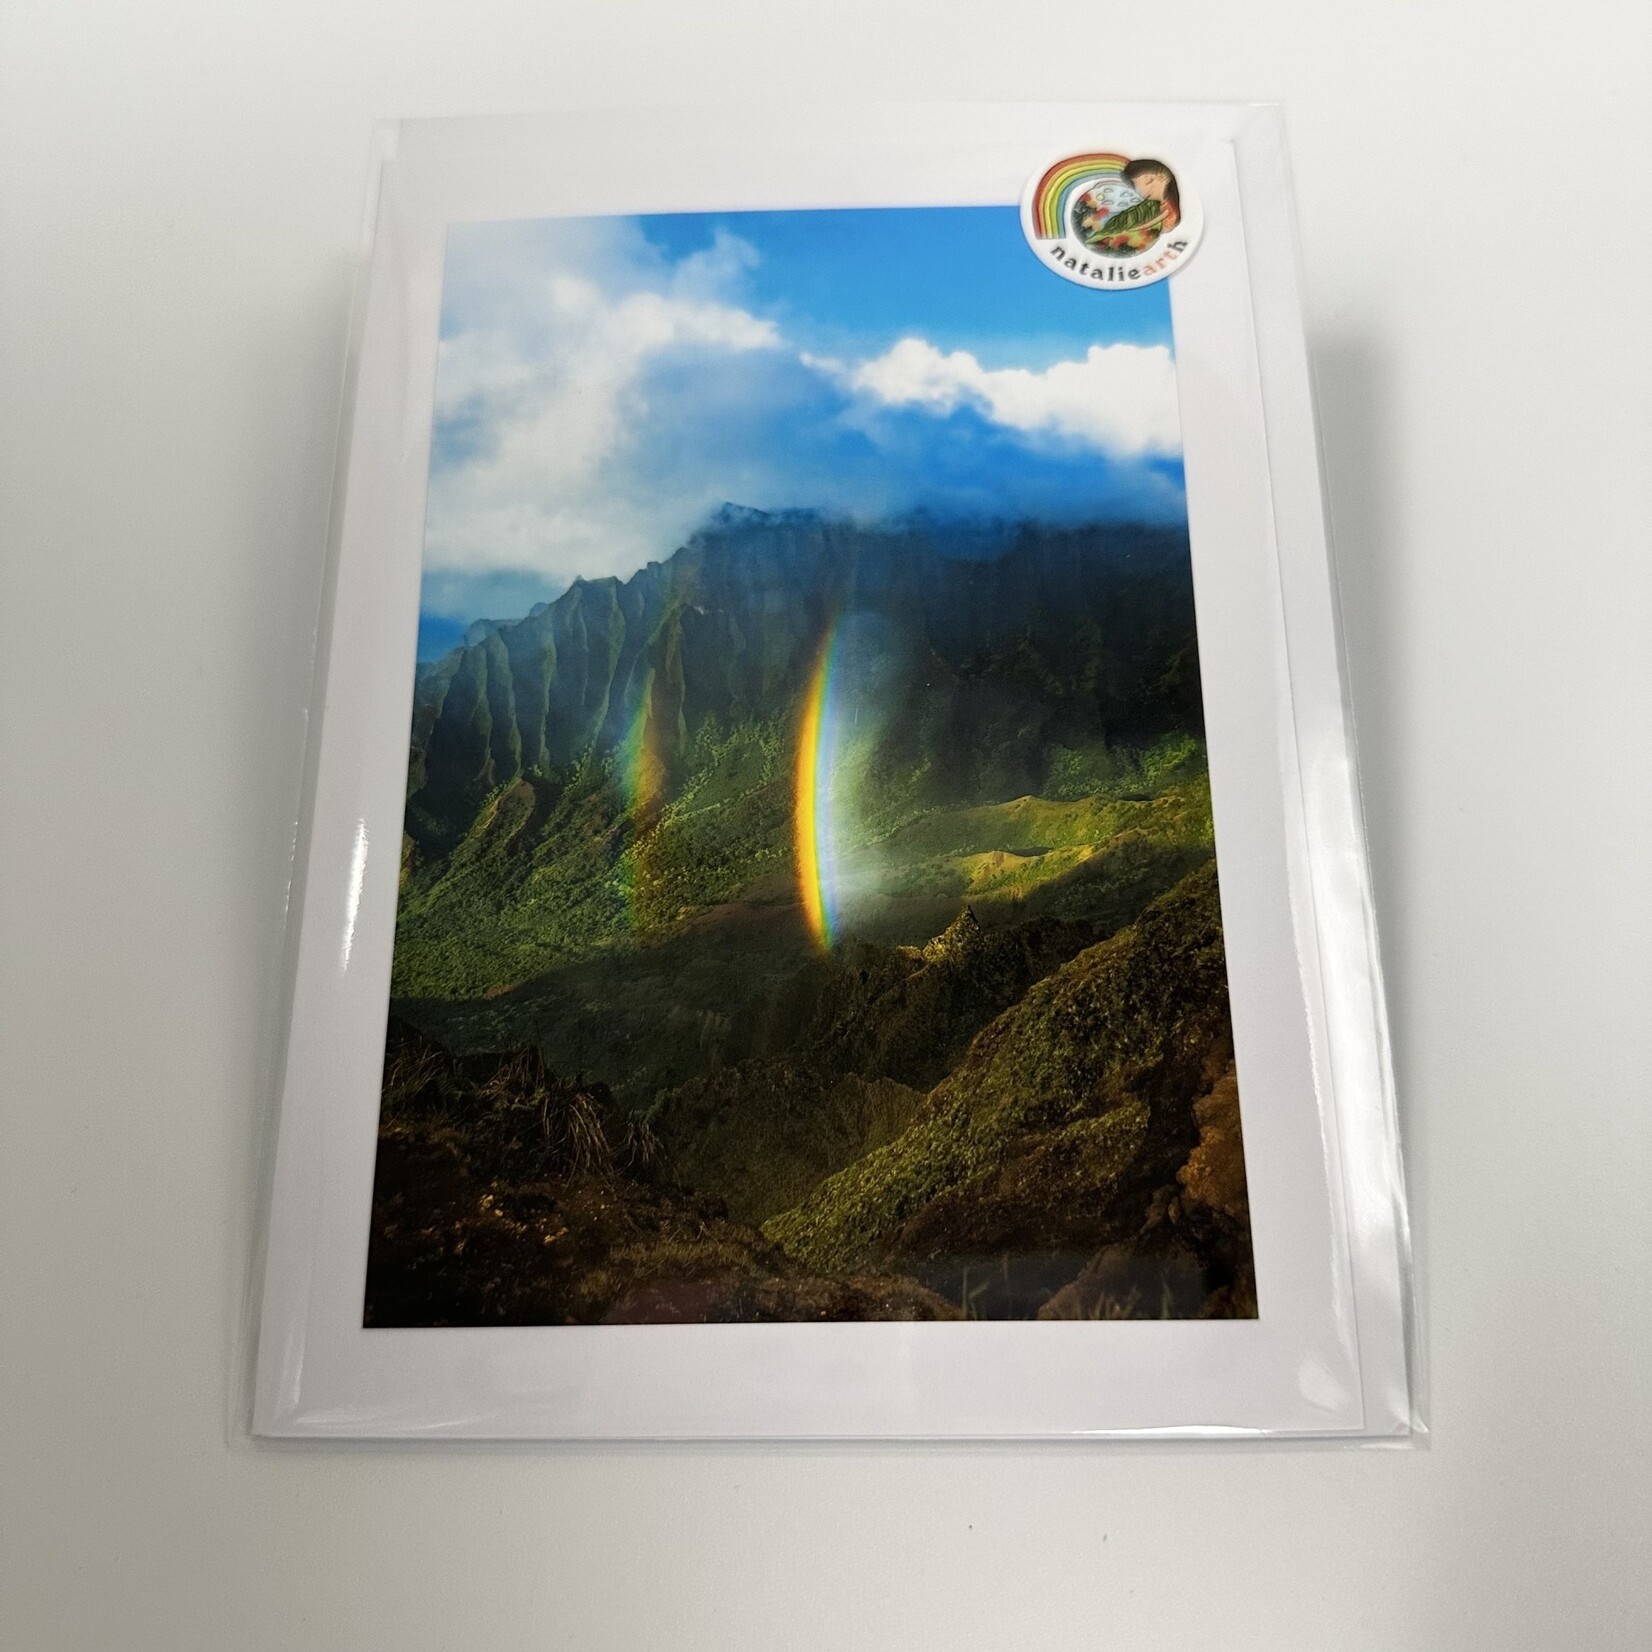 Natalie Earth LLC Dreamland of Kaua’i - Frame-able Greeting Card 5” x 7”